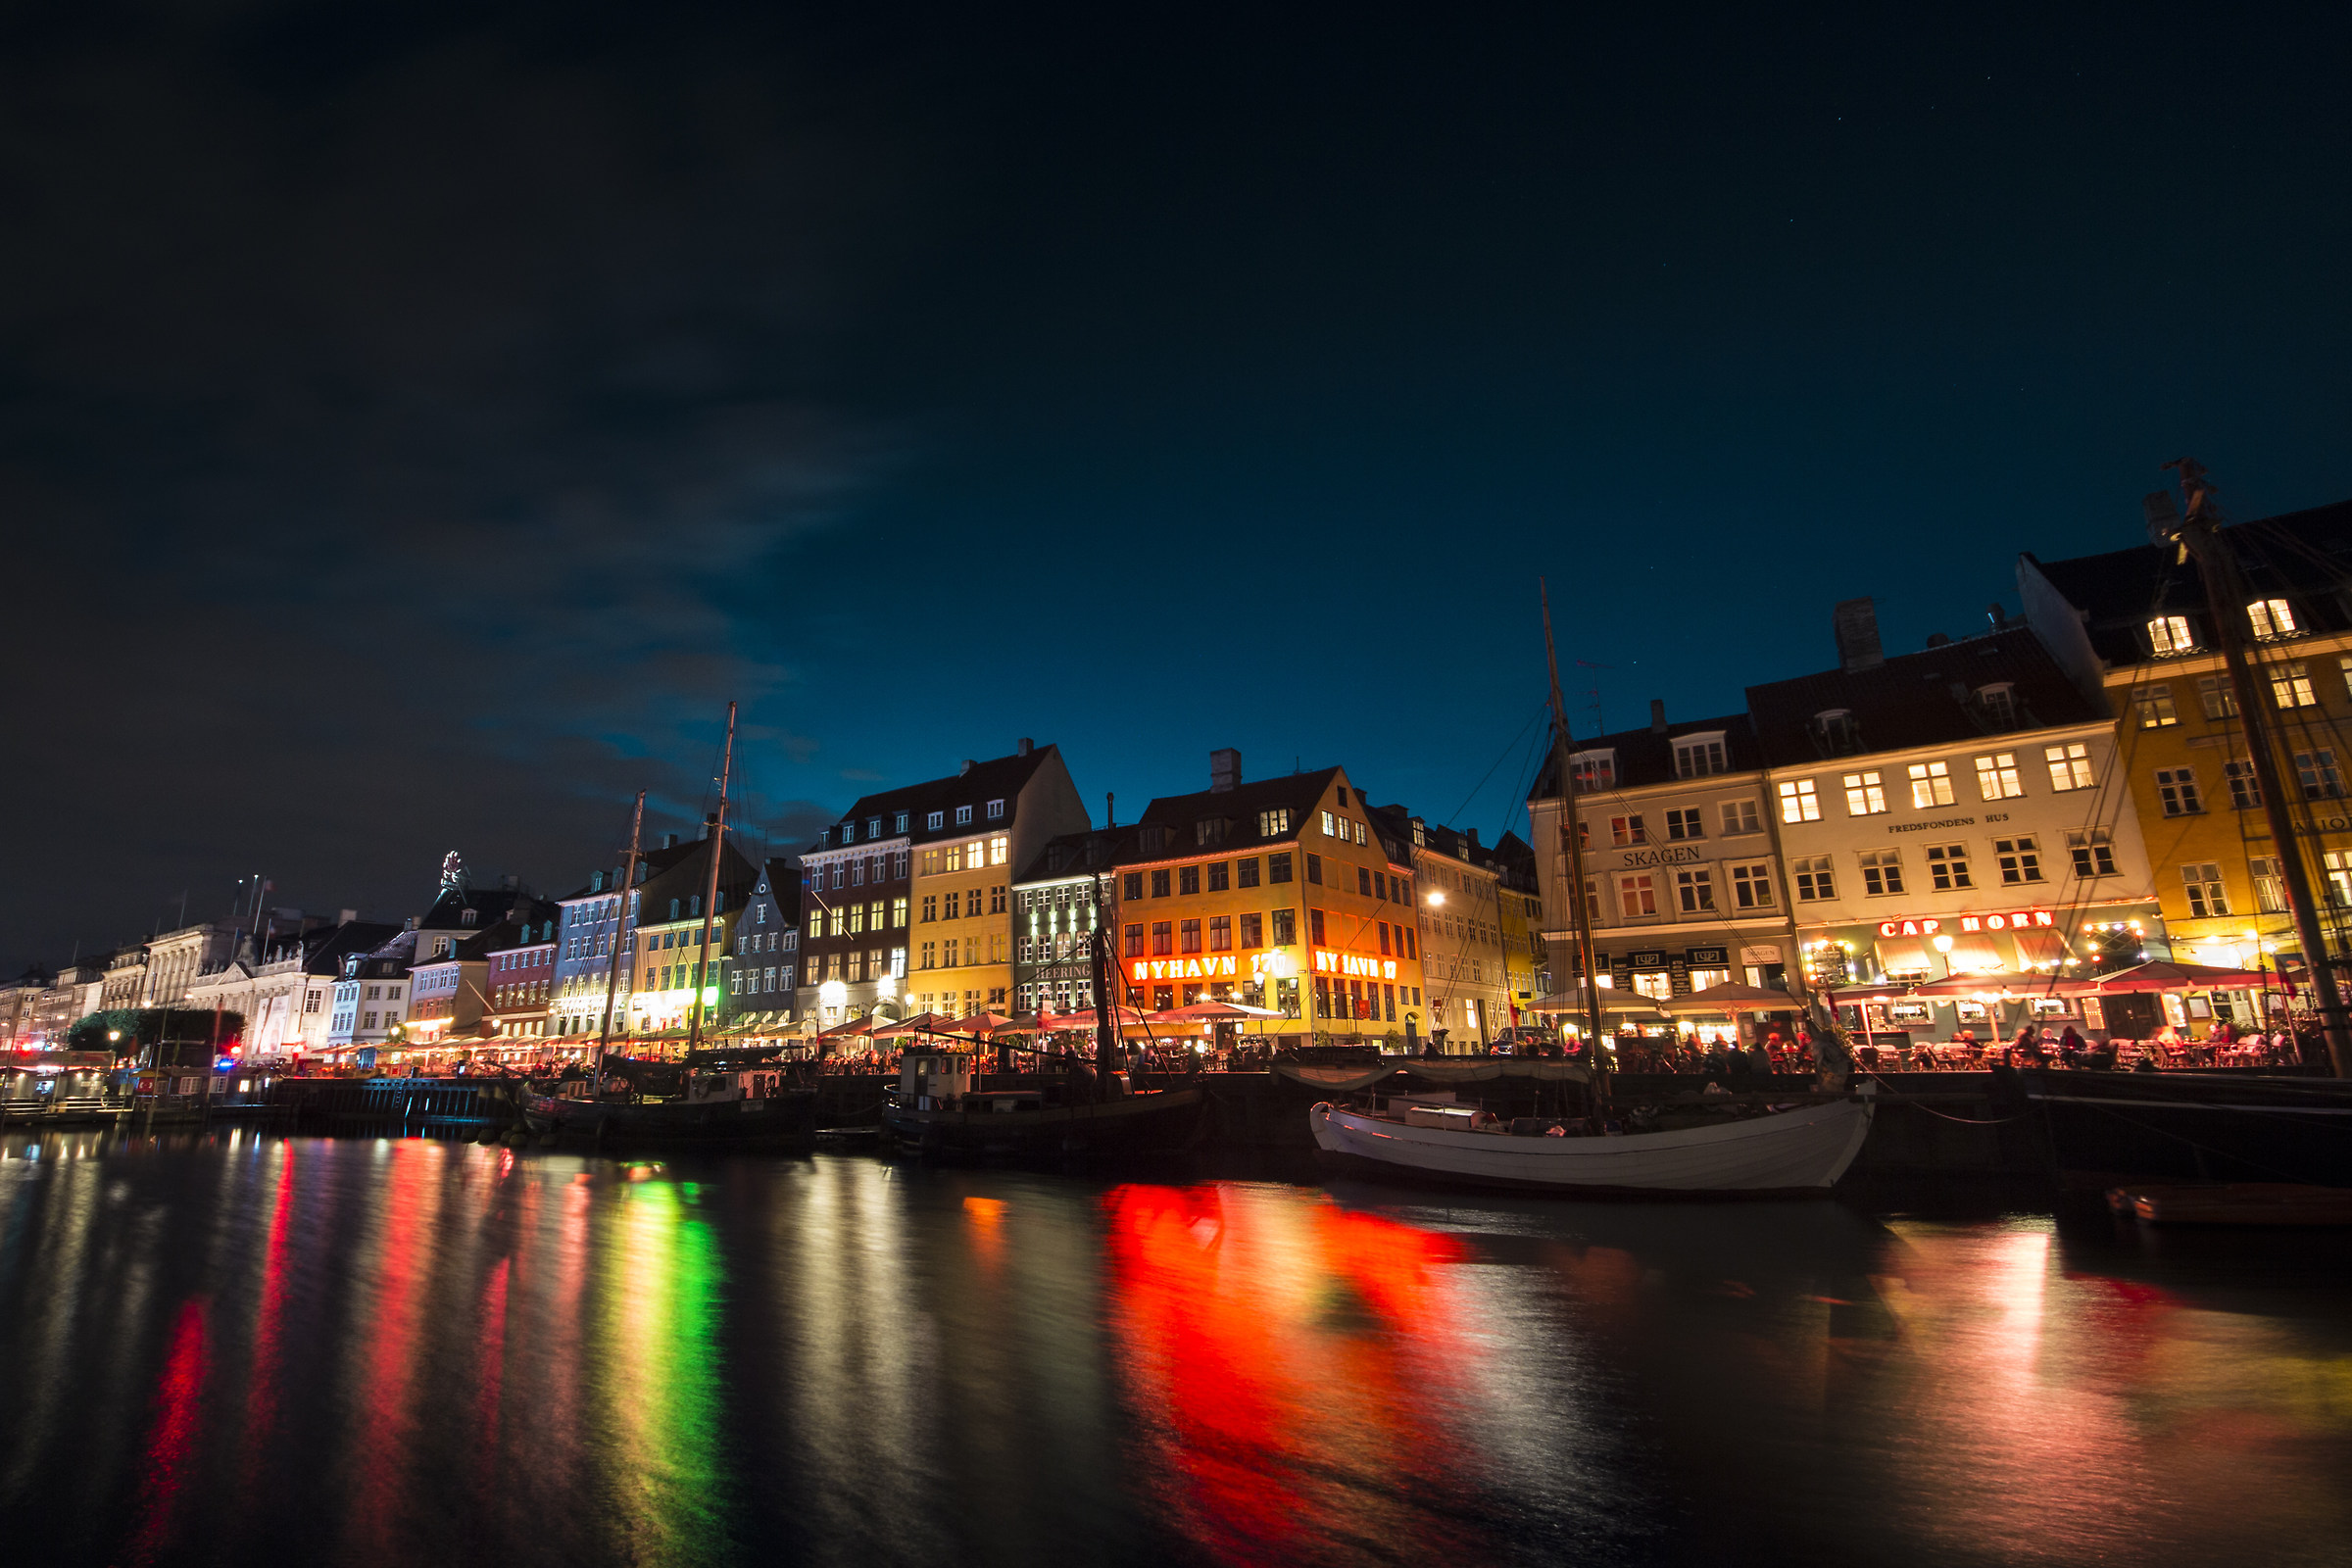 Evening at Nyhavn...